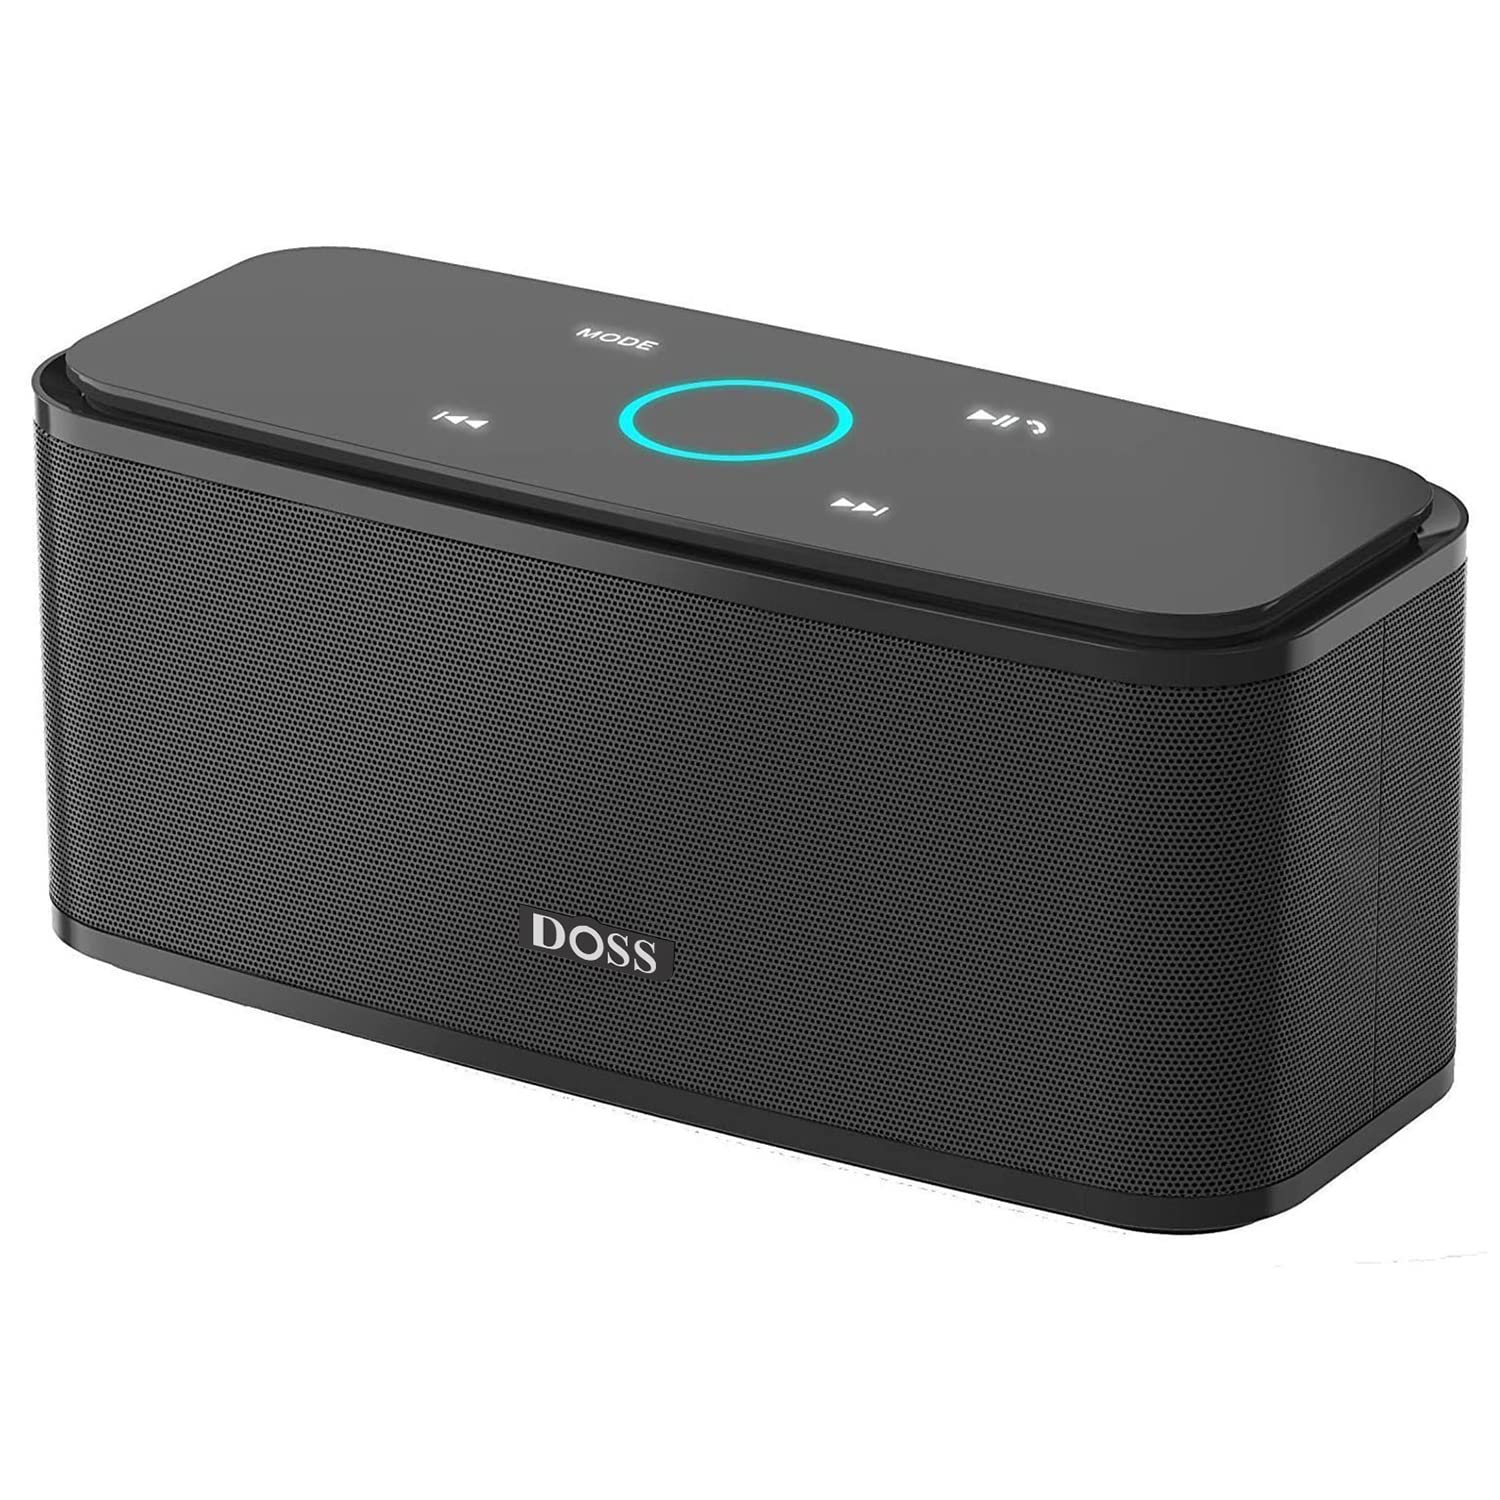  DOSS 蓝牙扬声器，SoundBox Touch 便携式无线扬声器，具有 12W 高清音效和低音，IPX5 防水，20 小时播放时间，触摸控制，免提，家用、户外、旅行扬声器 -...